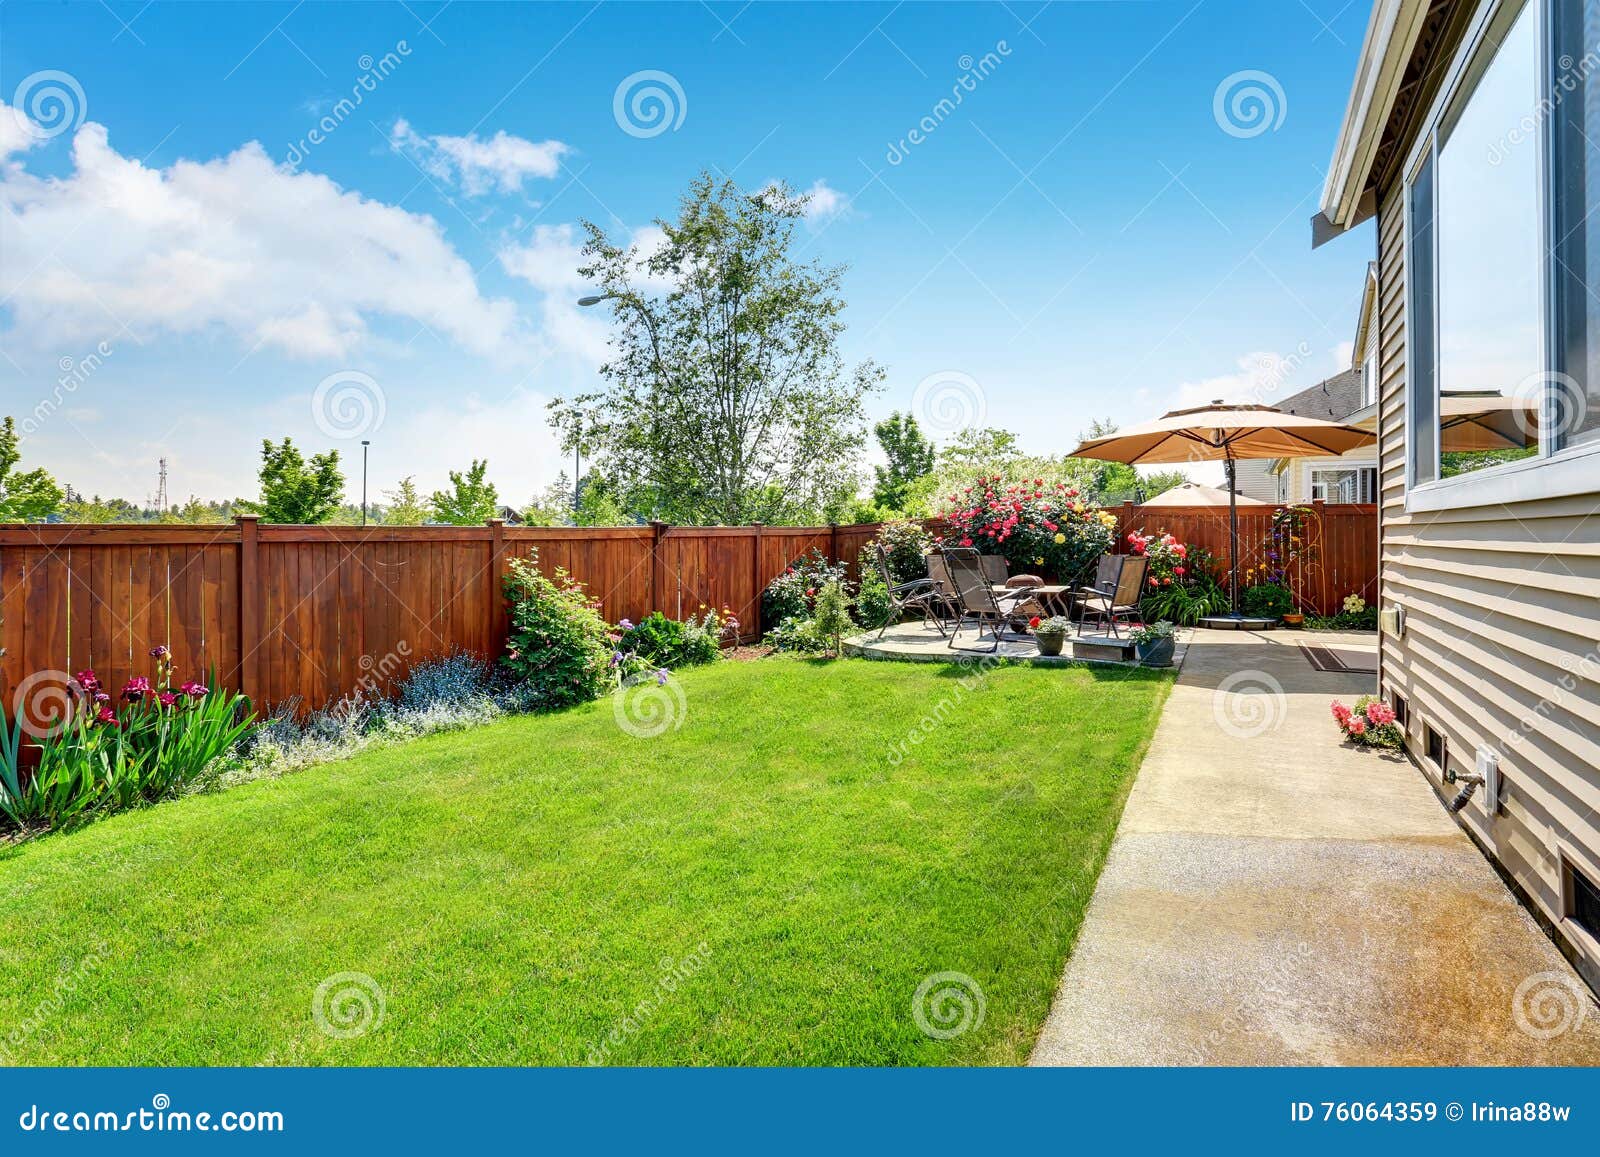 beautiful landscape  for backyard garden and patio area